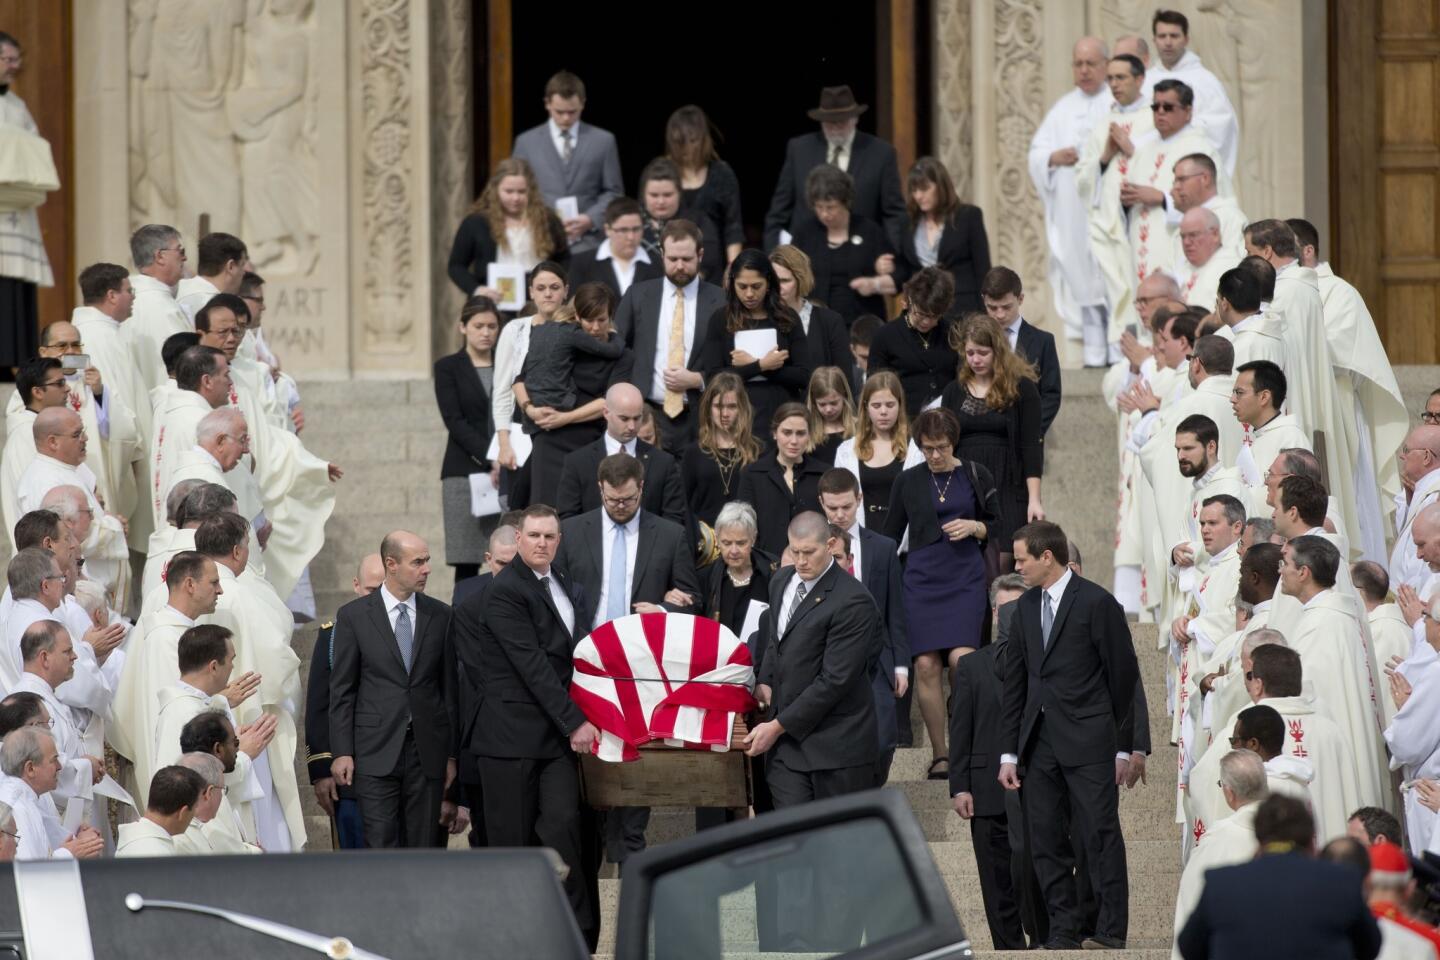 Justice Antonin Scalia's funeral